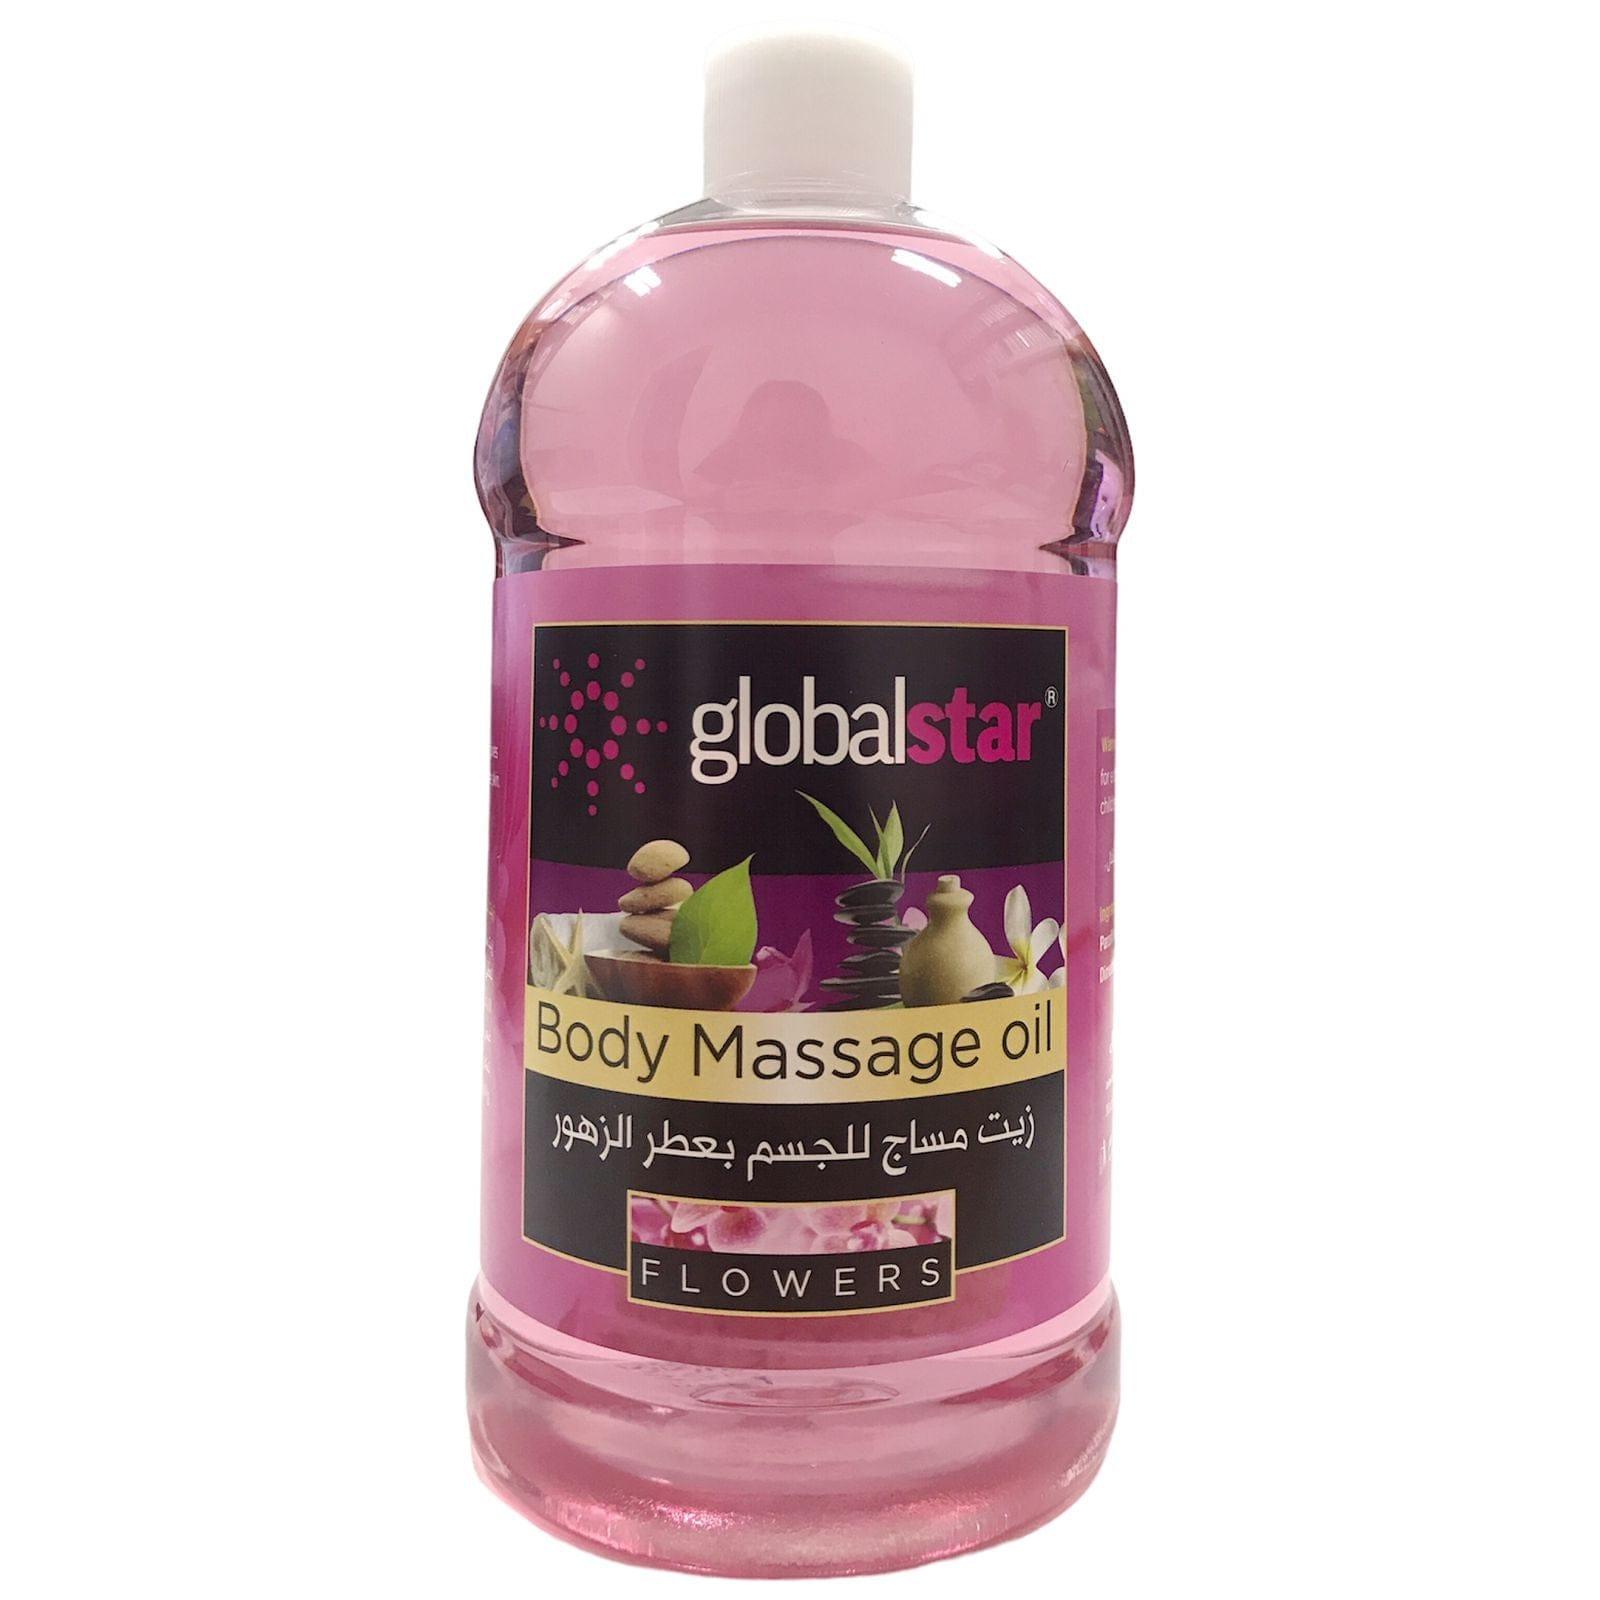 Globalstar Body Massage Oil Flowers Extract 1000ml